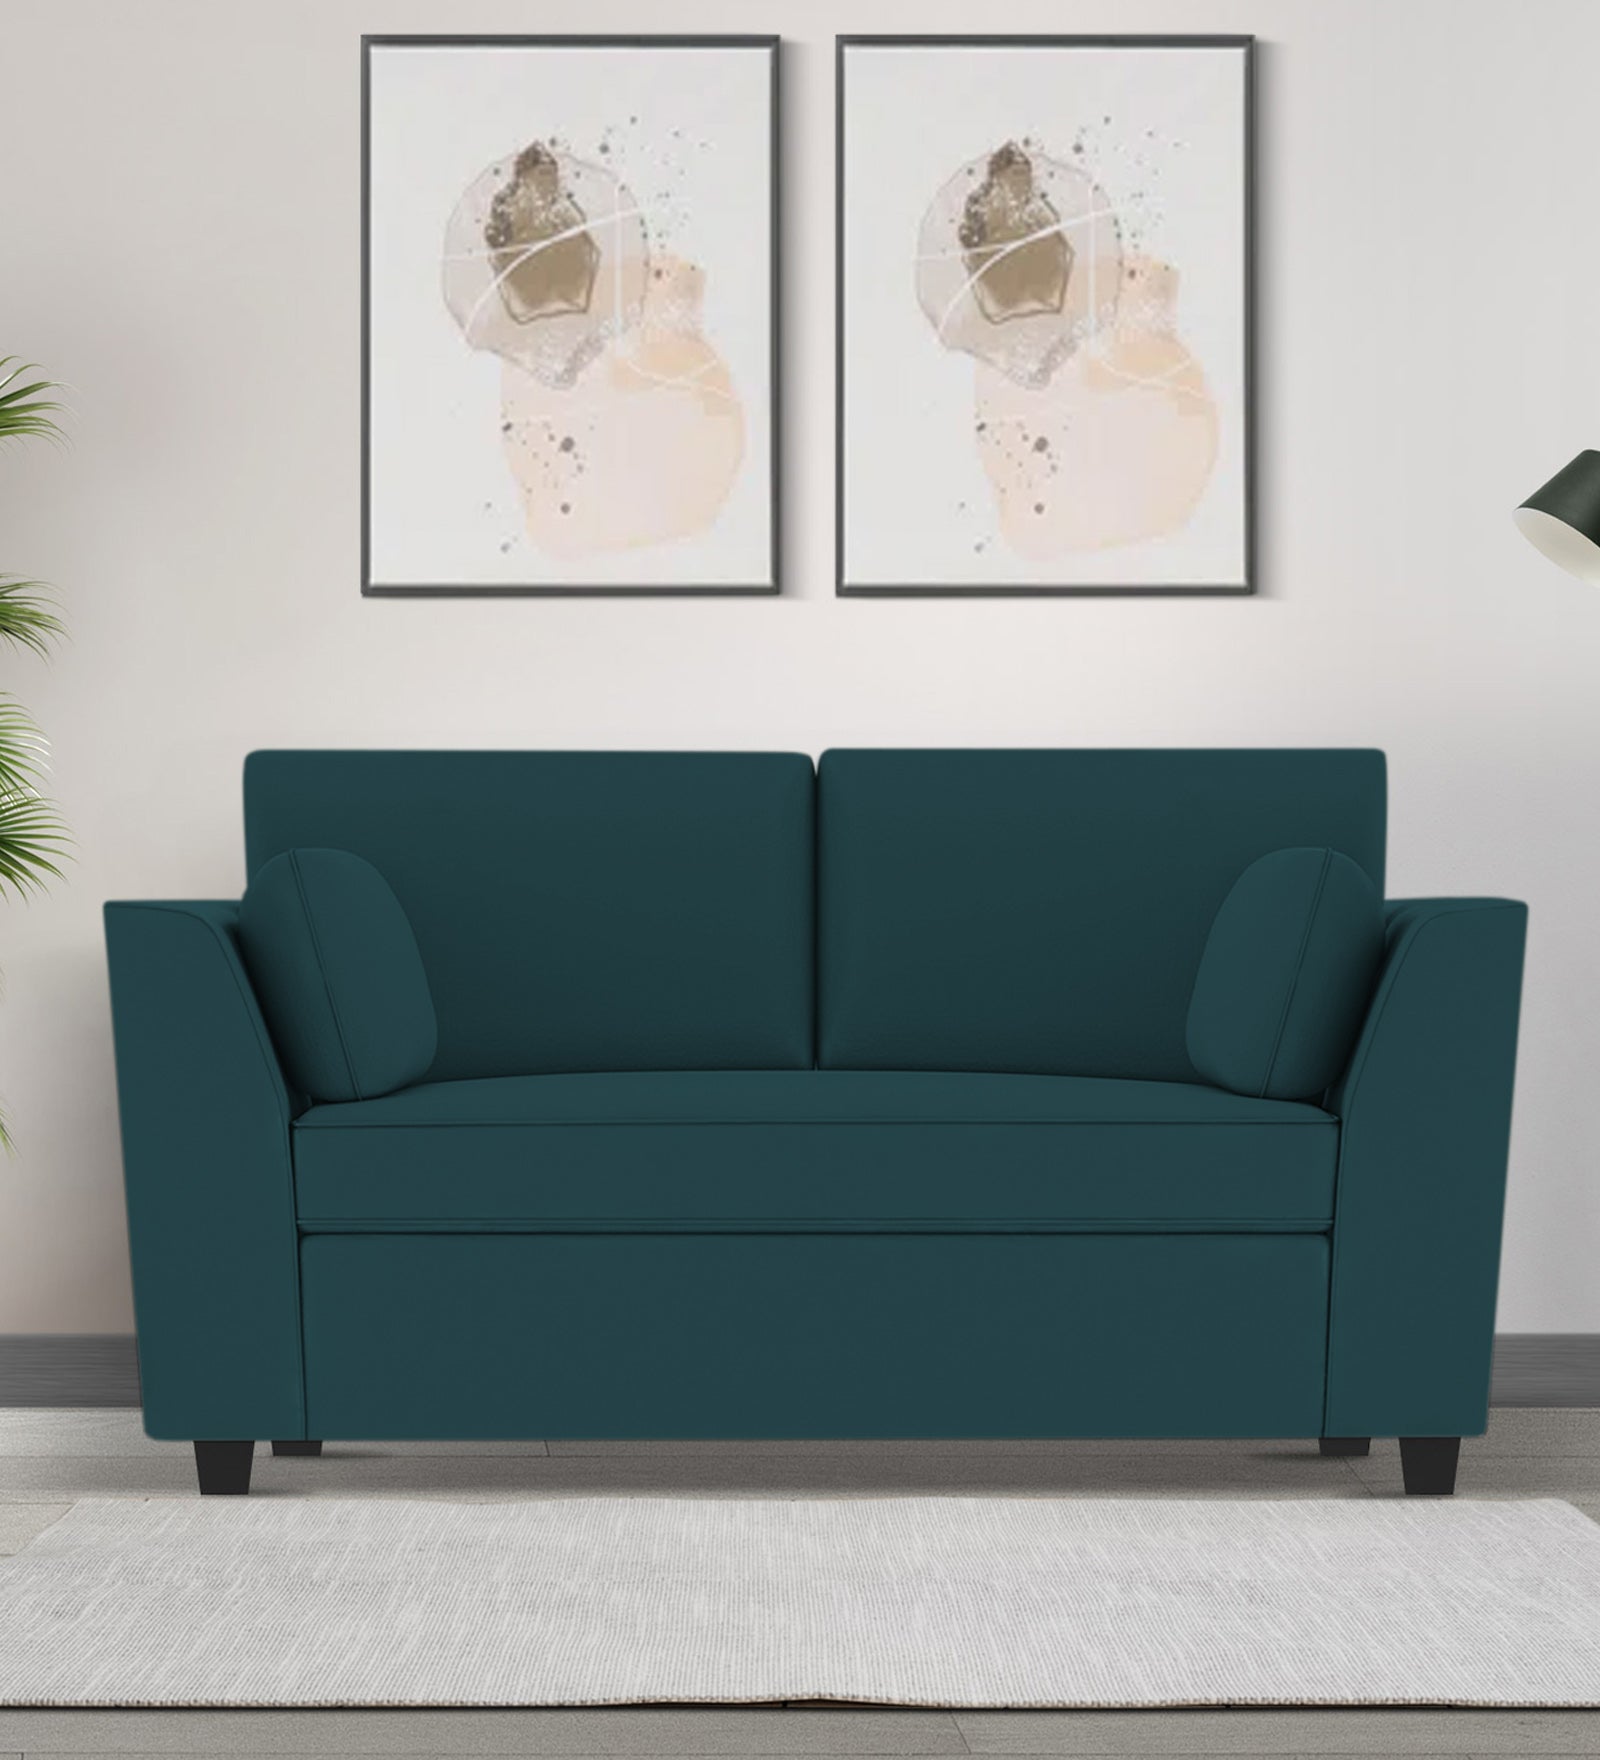 Bristo Velvet 2 Seater Sofa in Arabian Green Colour With Storage